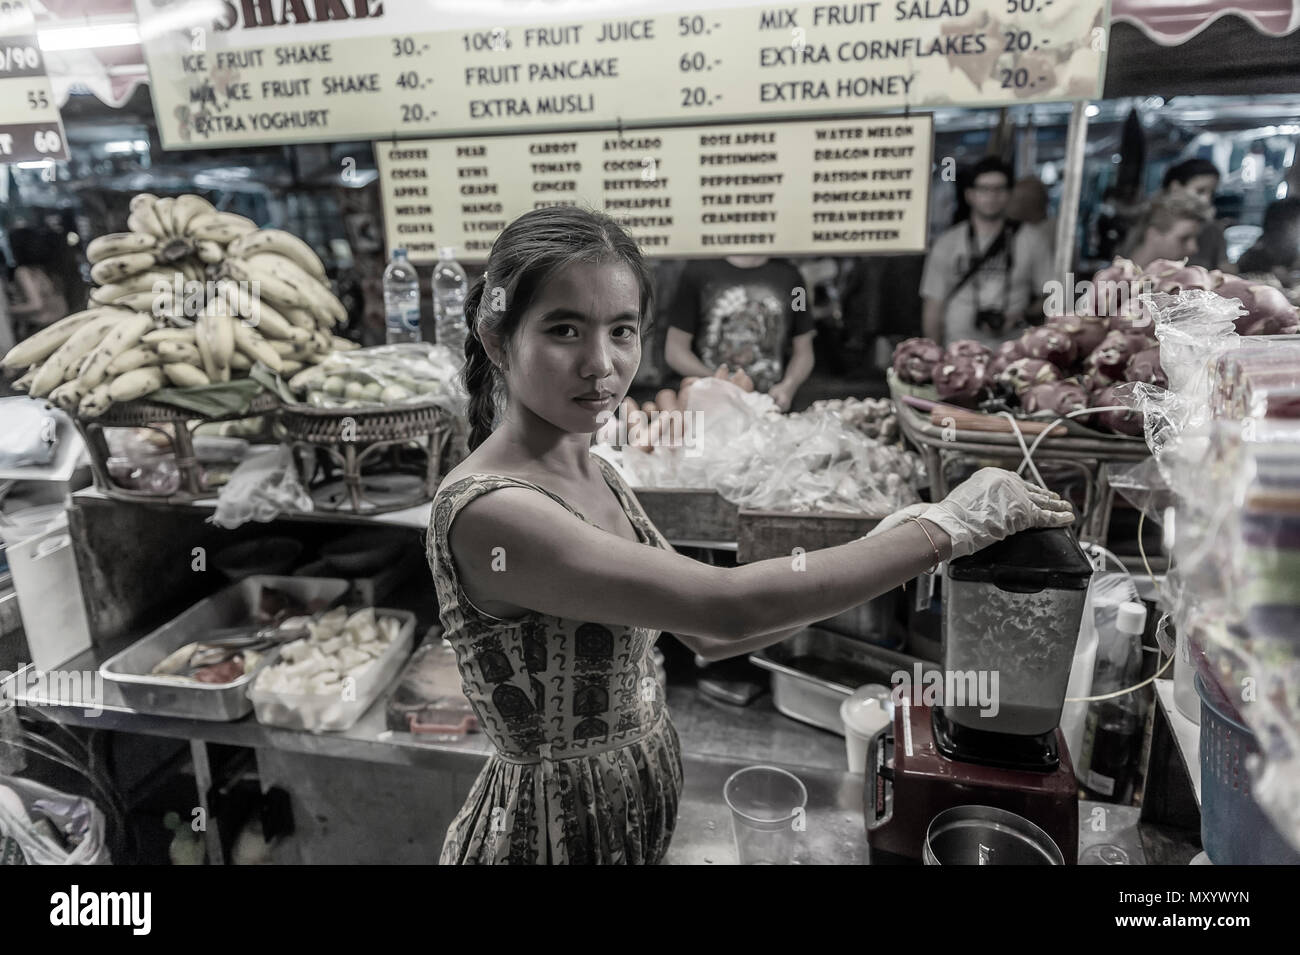 Fruchtsaft und Schütteln, Stall, Khaosan Road, Bangkok, Thailand Stockfoto